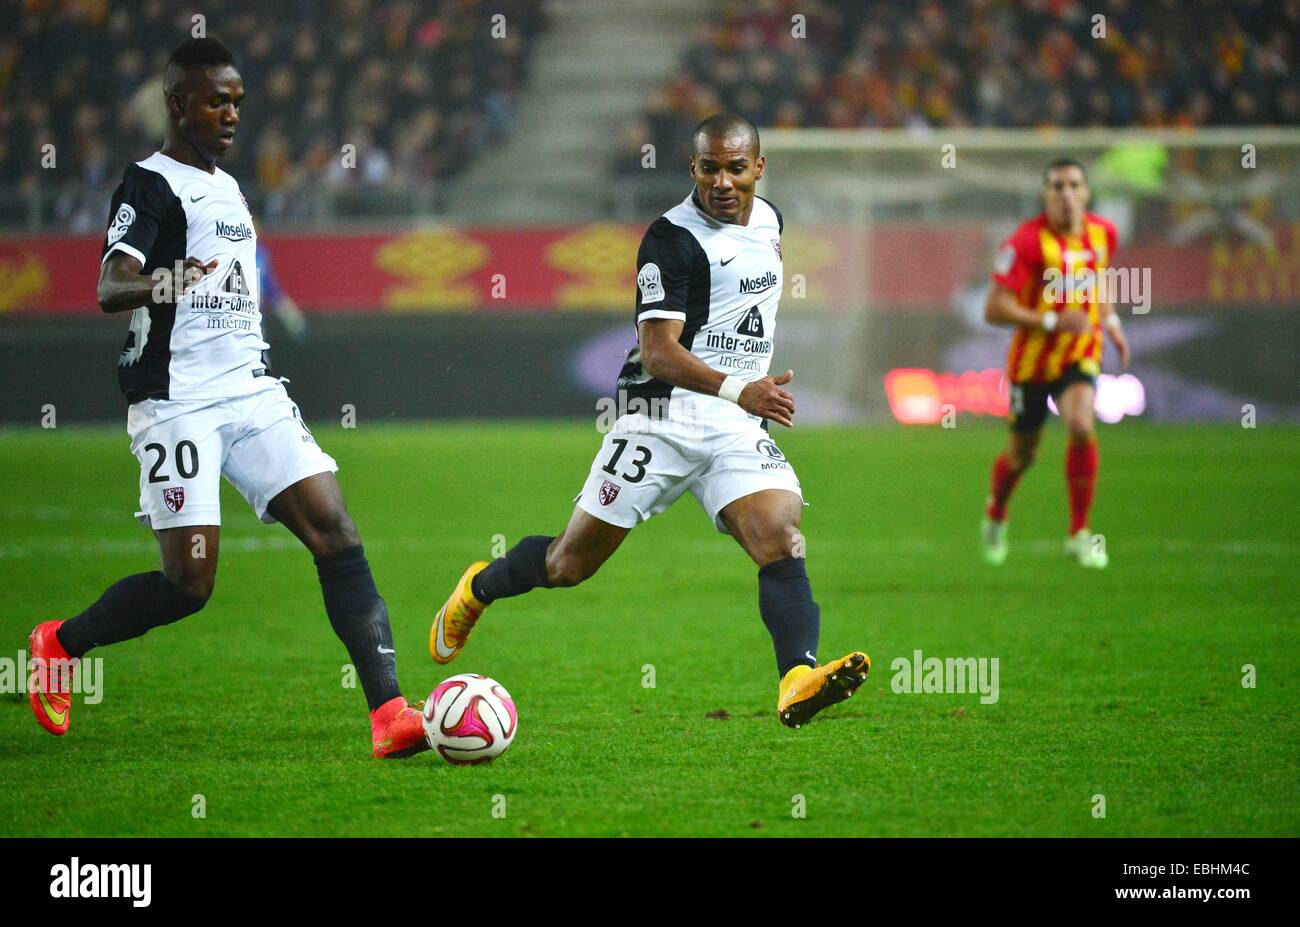 Modibo MAIGA/Florent MALOUDA - 29.11.2014 - Obiettivo/Metz - 15eme journee de Ligue 1 - Amiens foto : Dave inverno/Icona Sport Foto Stock